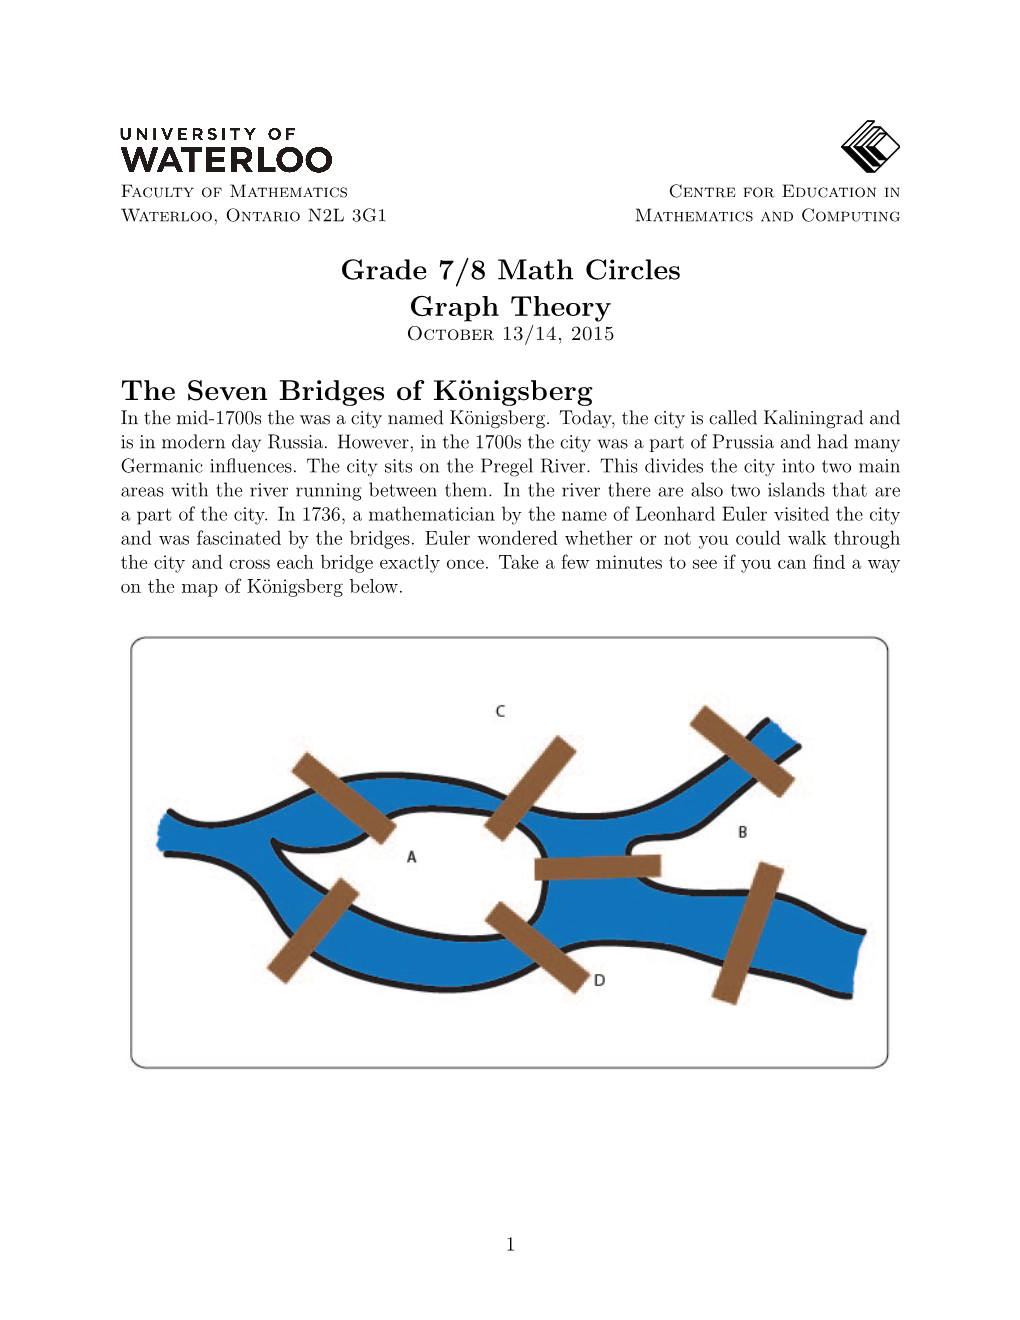 Grade 7/8 Math Circles Graph Theory the Seven Bridges of Königsberg